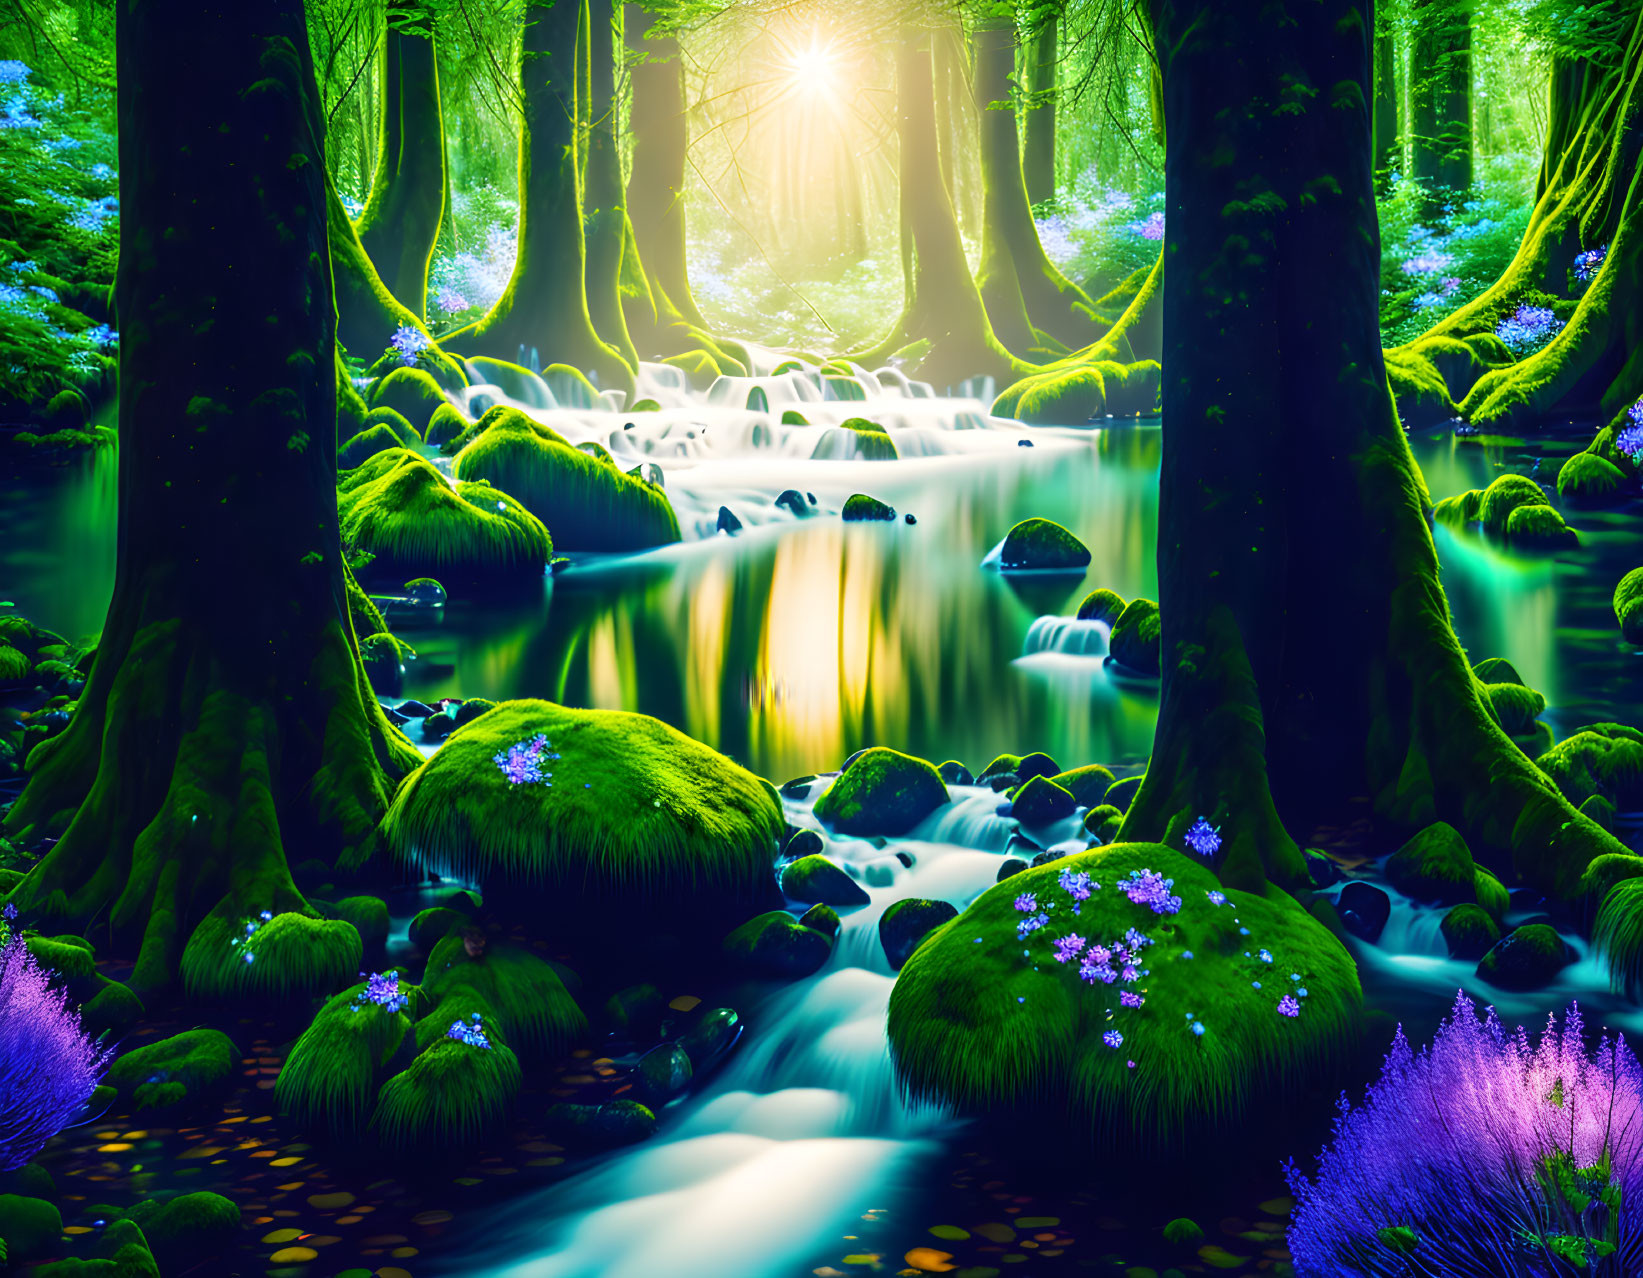 Vibrant Green Trees, Luminous Stream, Purple Flowers: Enchanted Forest Scene